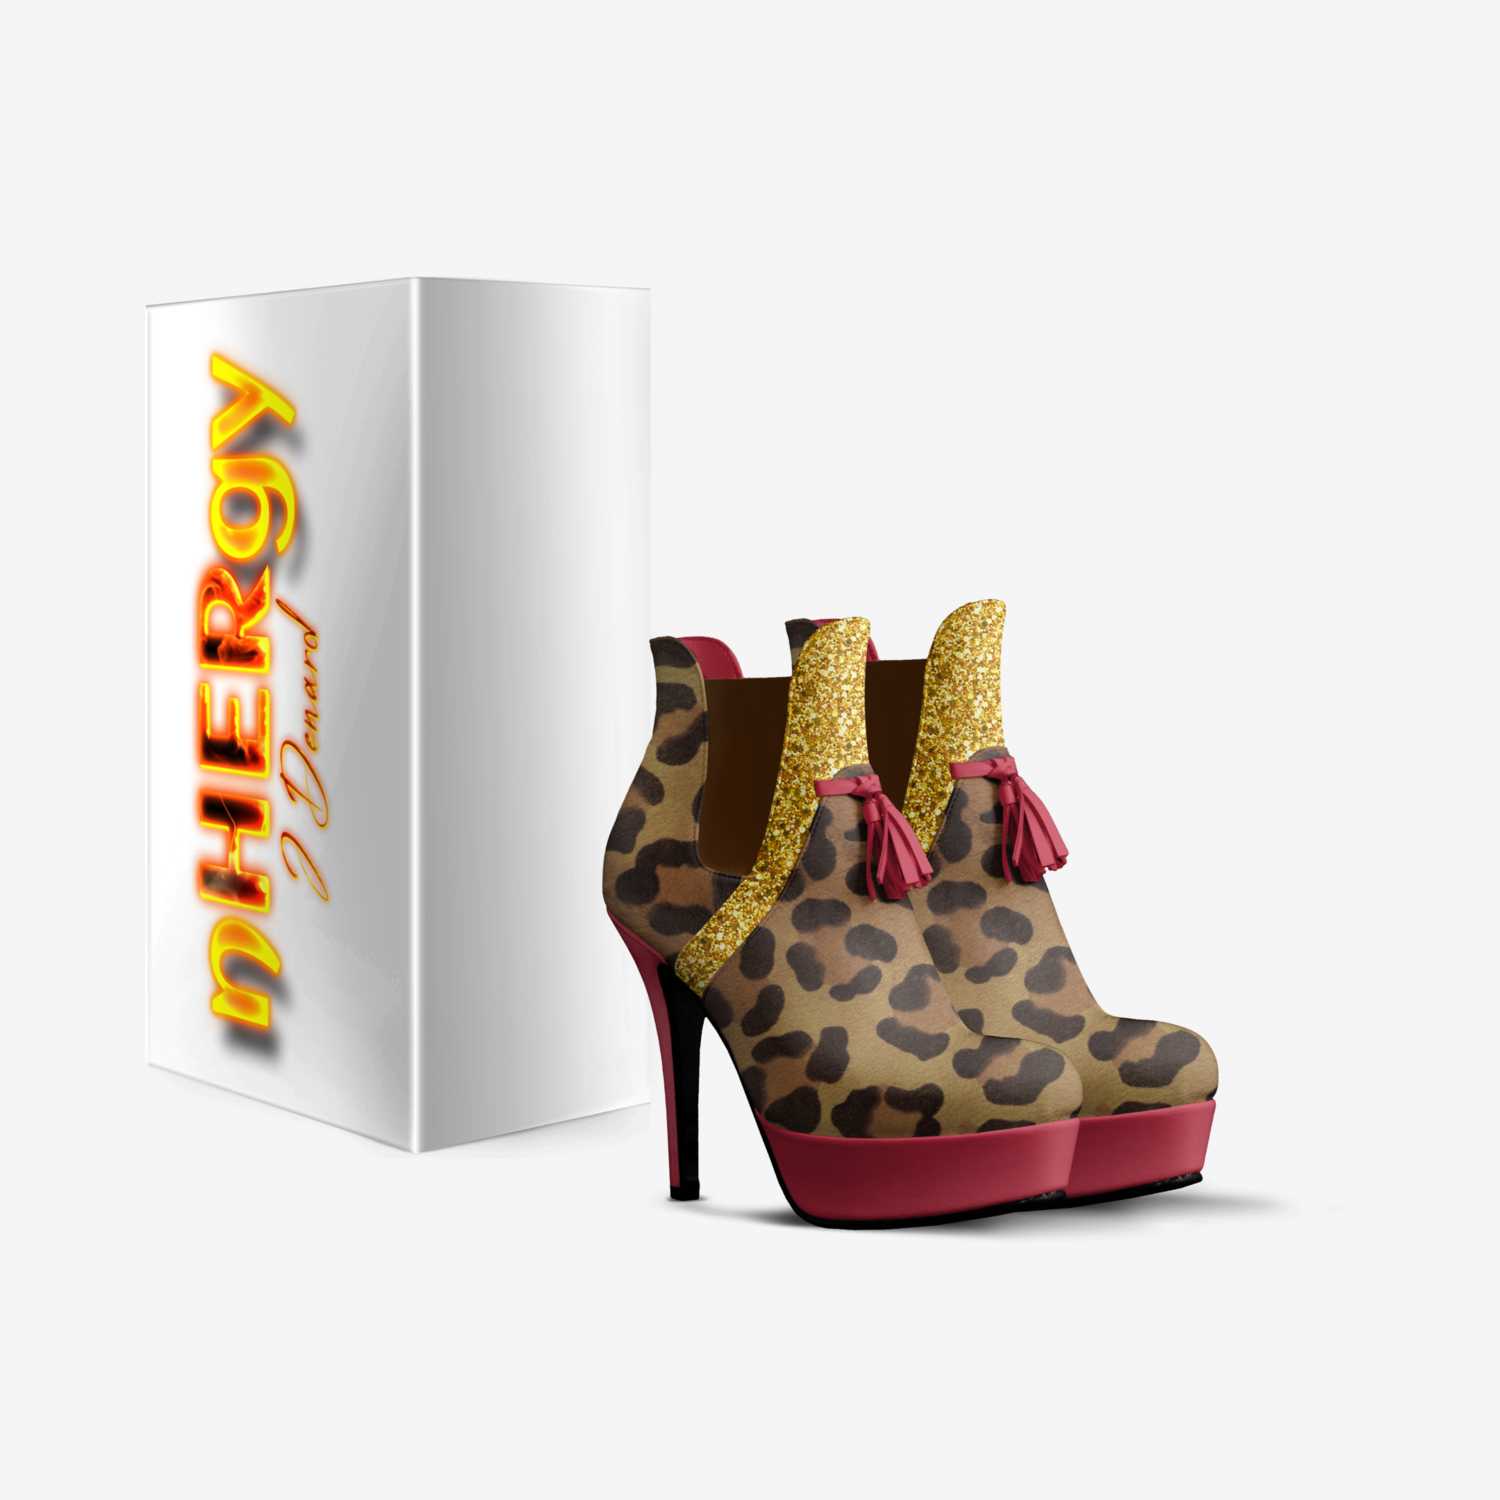 nHERgy by J Denard custom made in Italy shoes by Jarrod Dixon | Box view